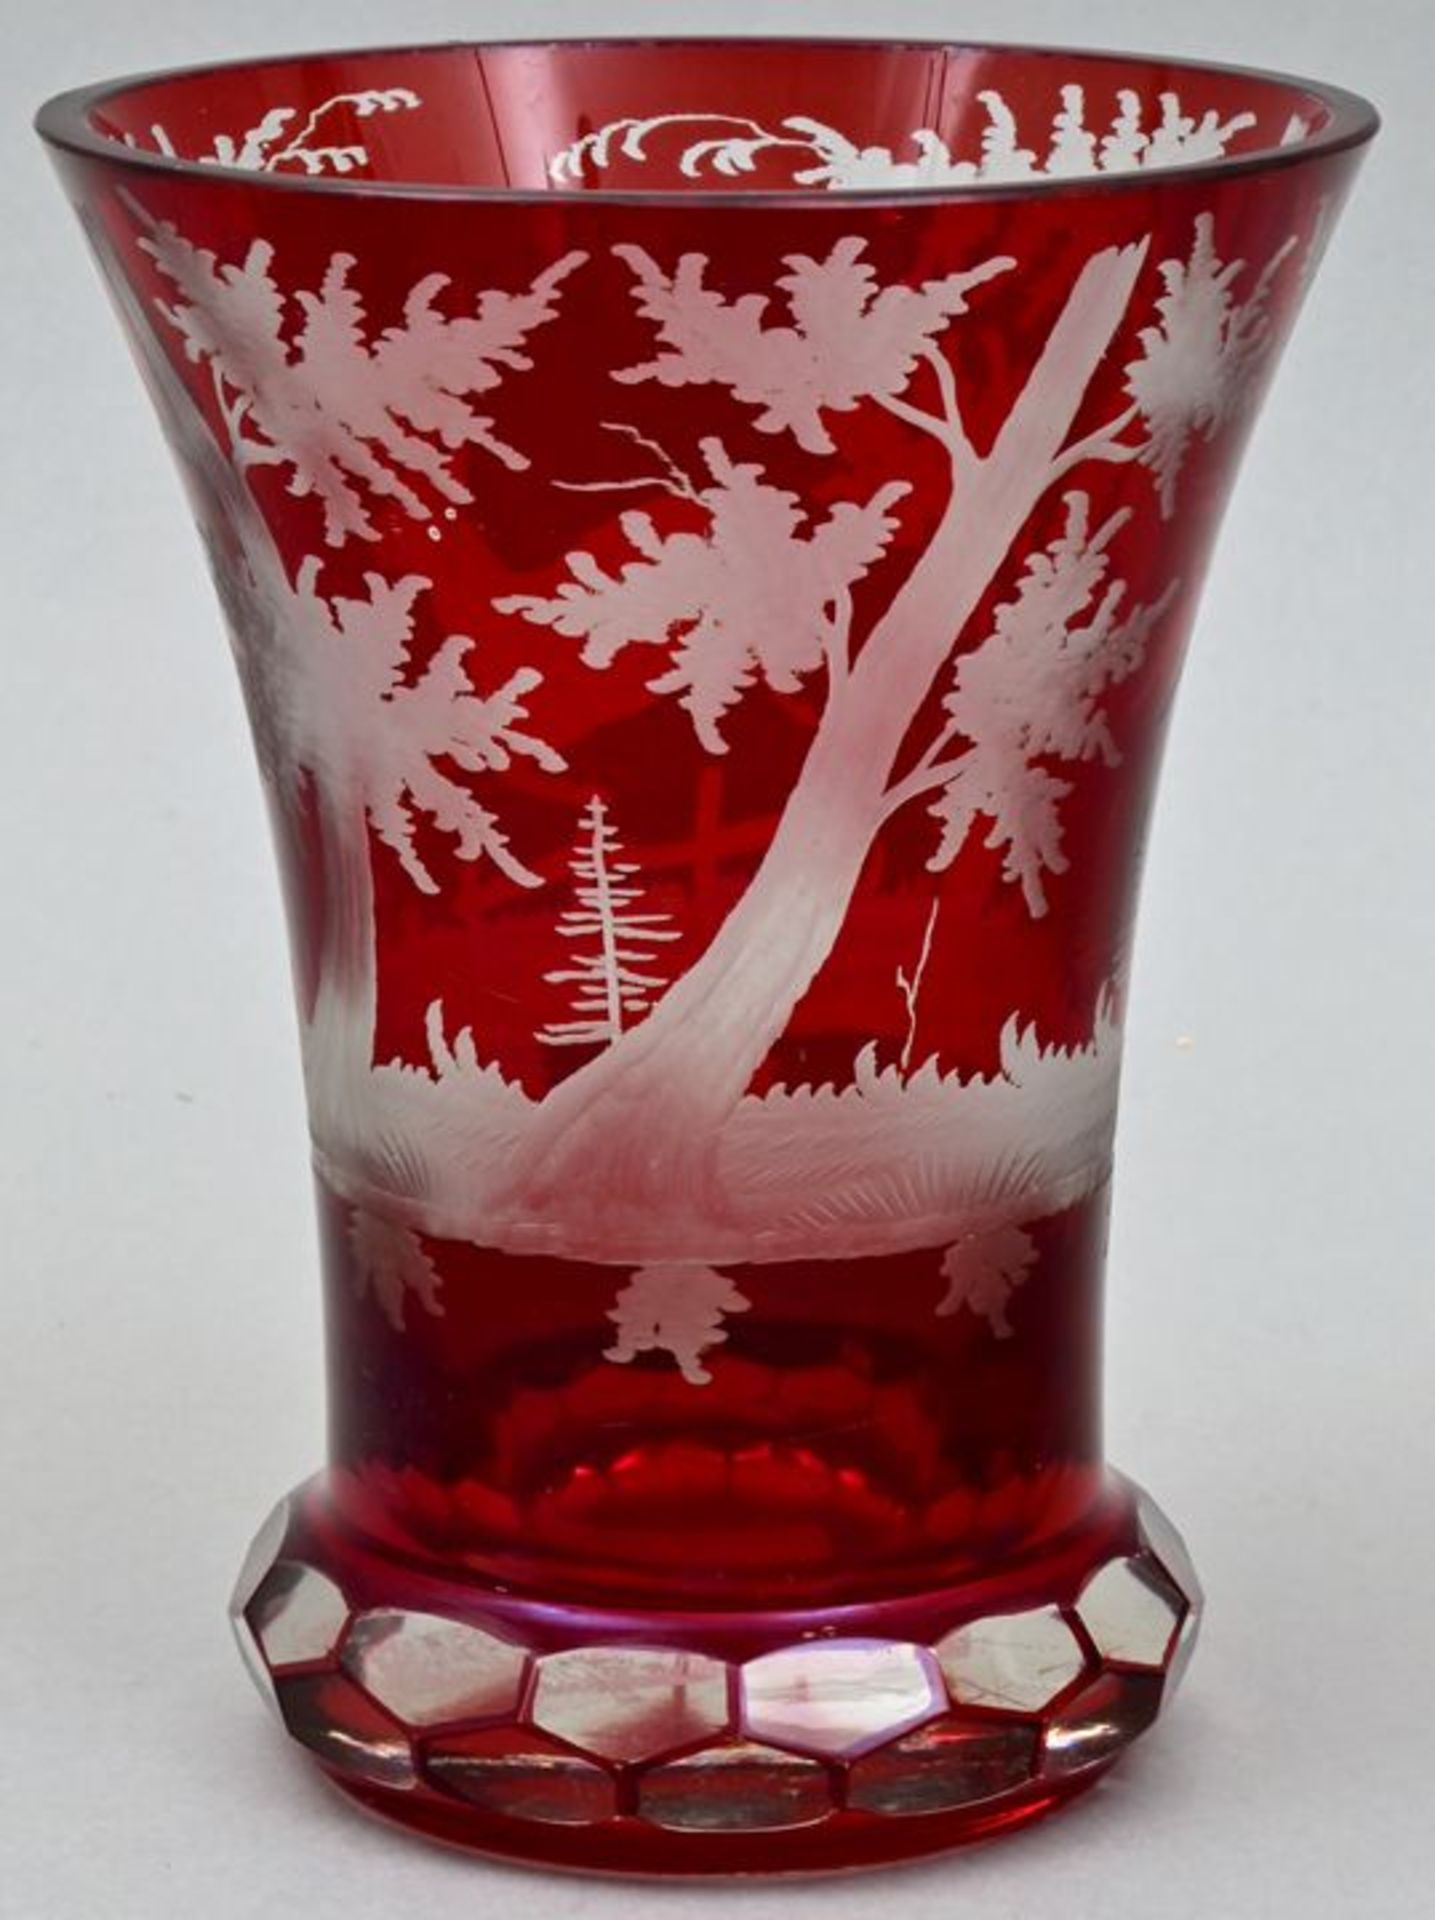 Ranftbecher / glass beaker - Image 2 of 3